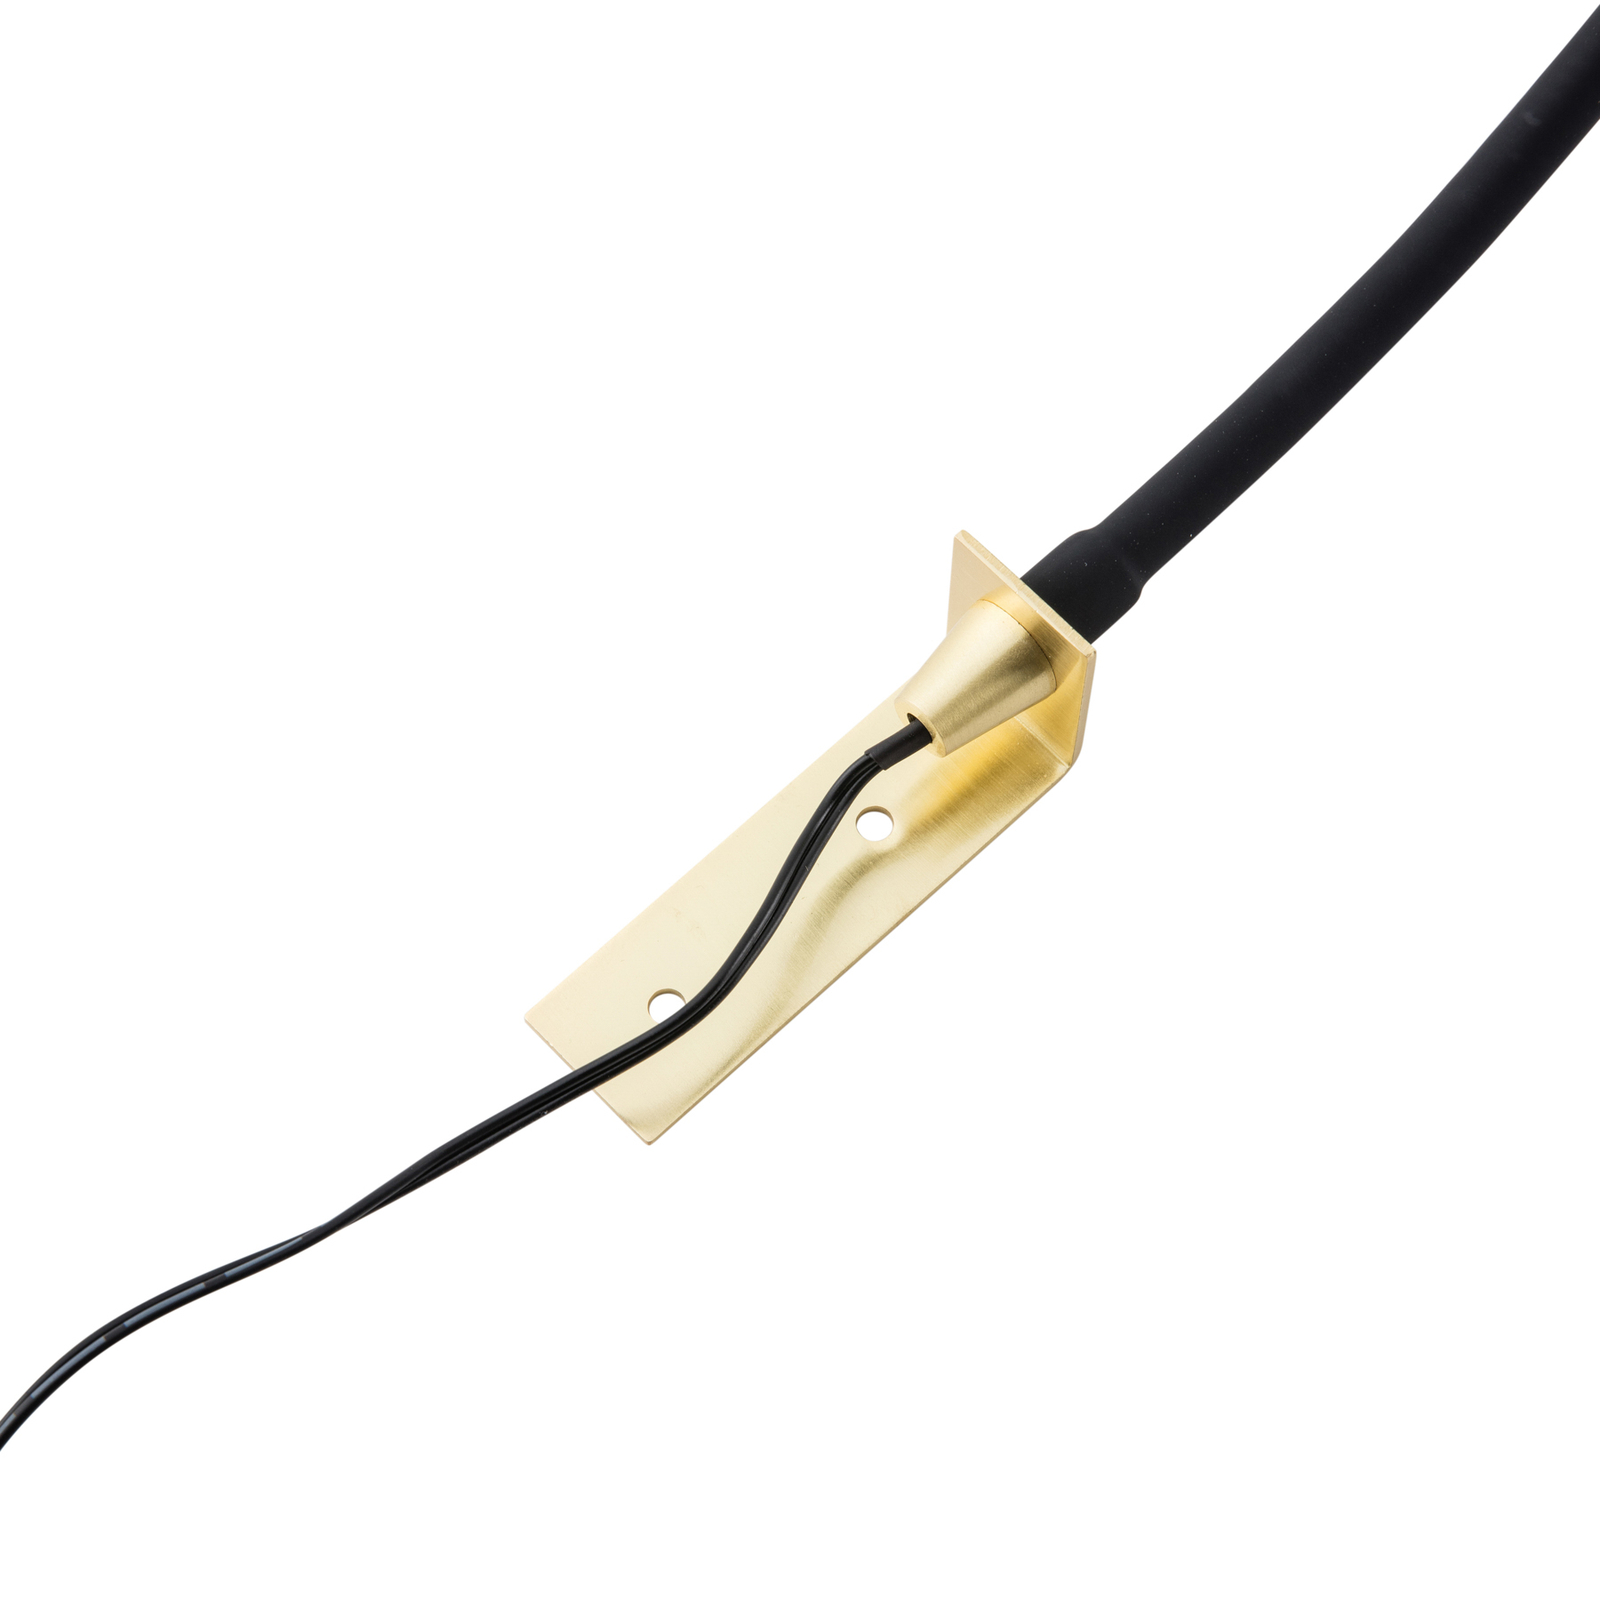 Lindby Flexola LED-Leselampe, gold, rund, Eisen, Stecker